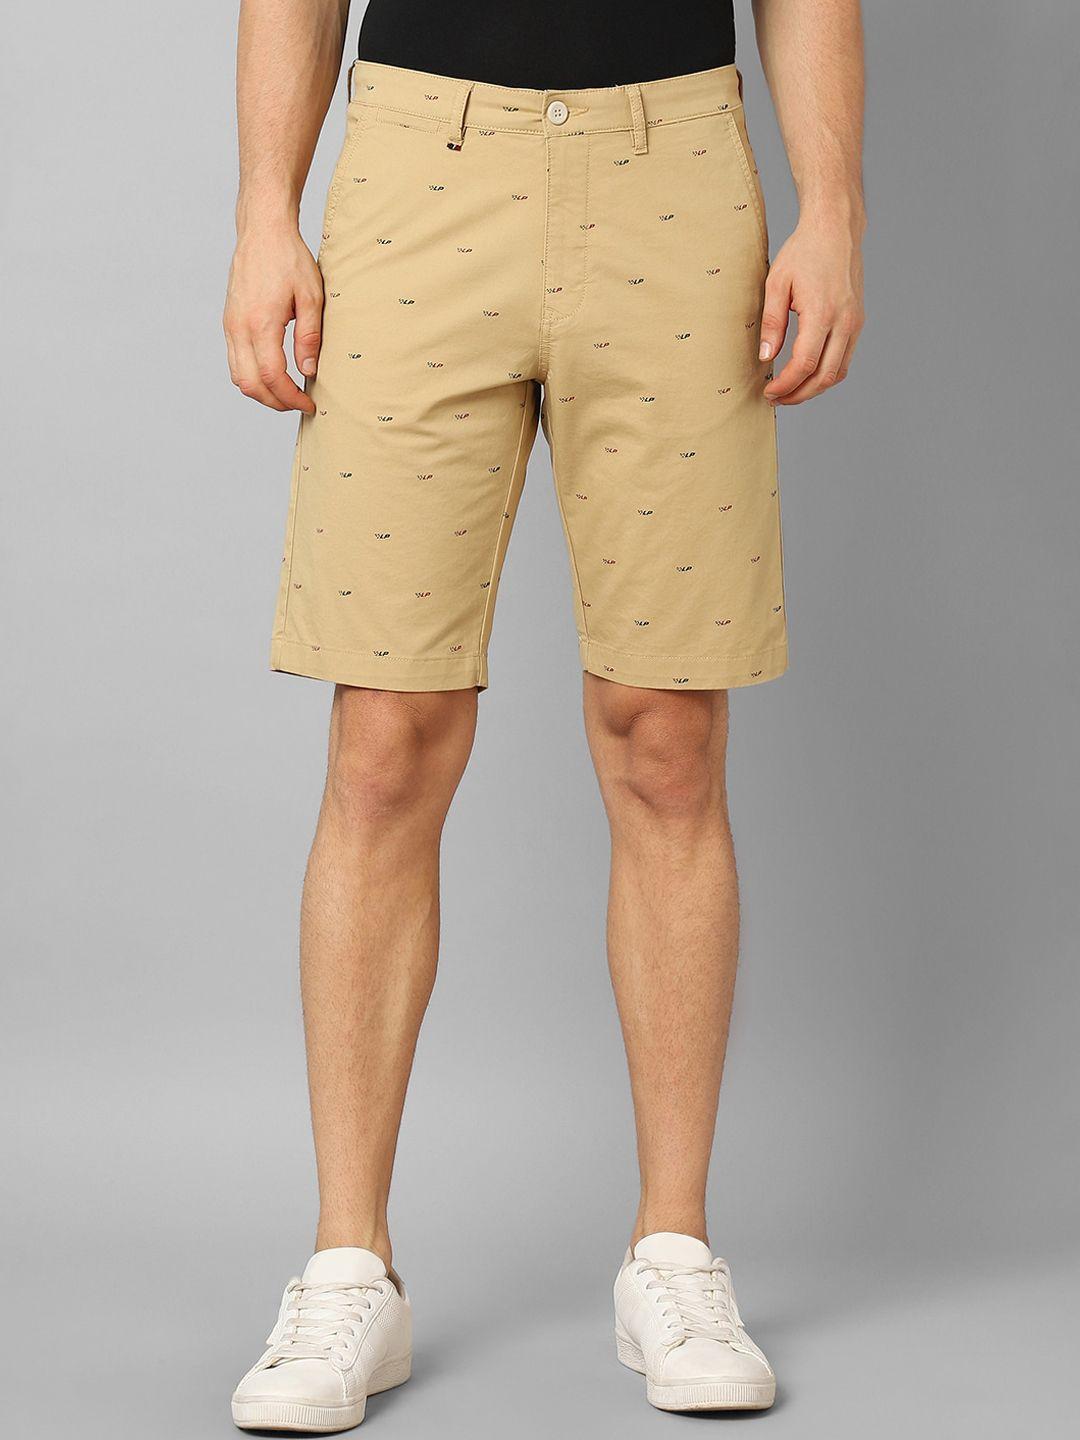 louis philippe sport men geometric printed slim fit shorts